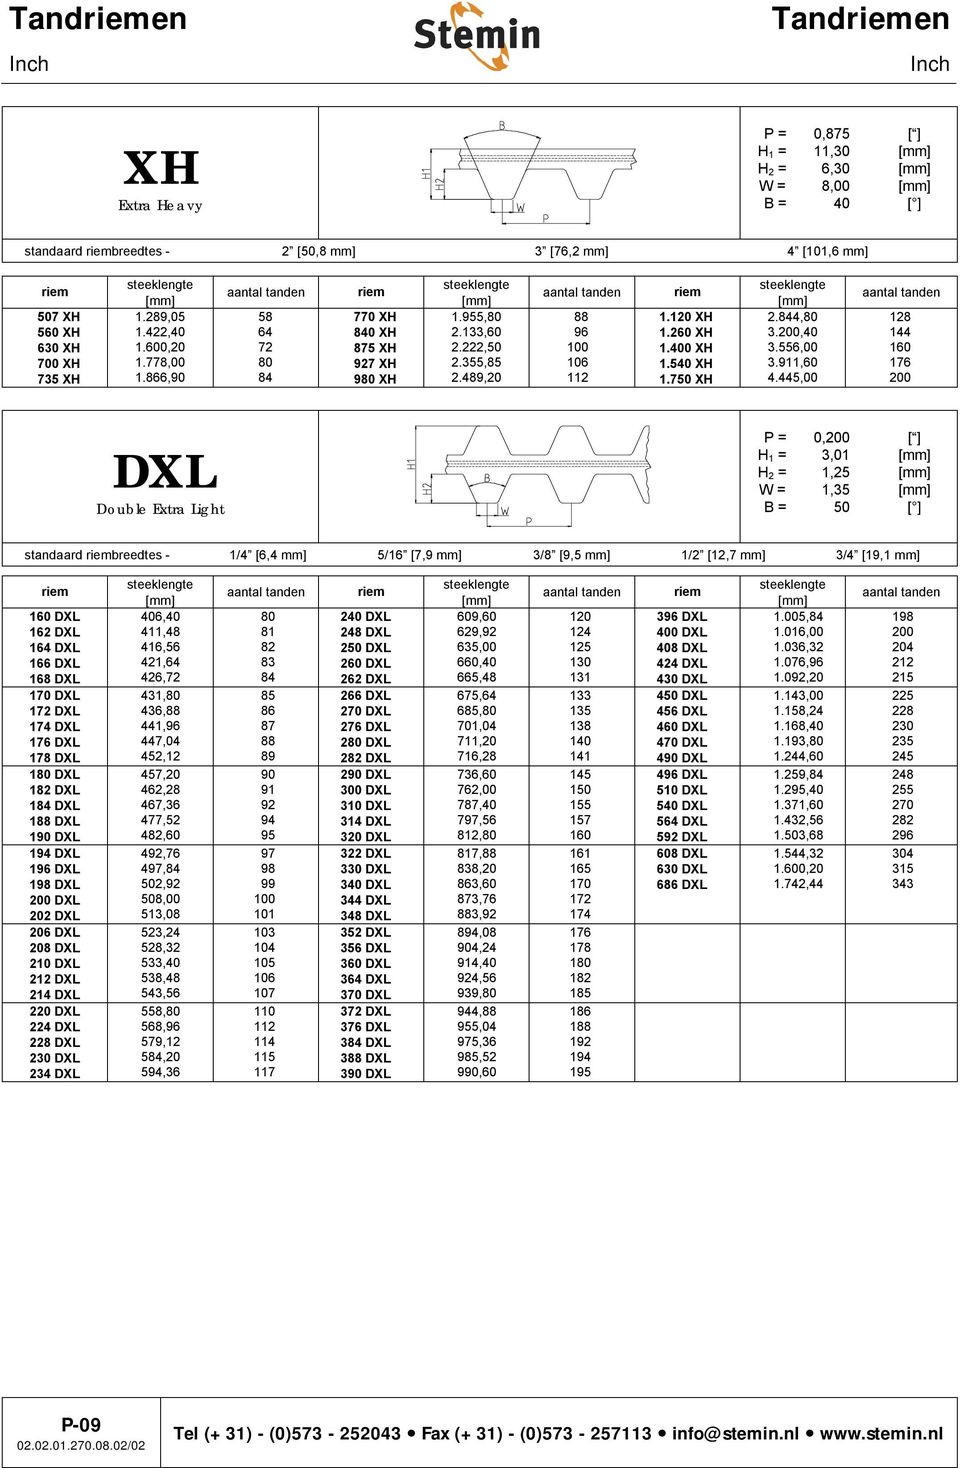 445,00 128 144 176 DXL Double Etra Light 0, 3,01 1,25 1,35 50 [ ] standaard riembreedtes 1/4 [6,4 mm] 5/16 [7,9 mm] 3/8 [9,5 mm] 1/2 [12,7 mm] 3/4 [19,1 mm] riem DXL 162 DXL 164 DXL 166 DXL 168 DXL 1